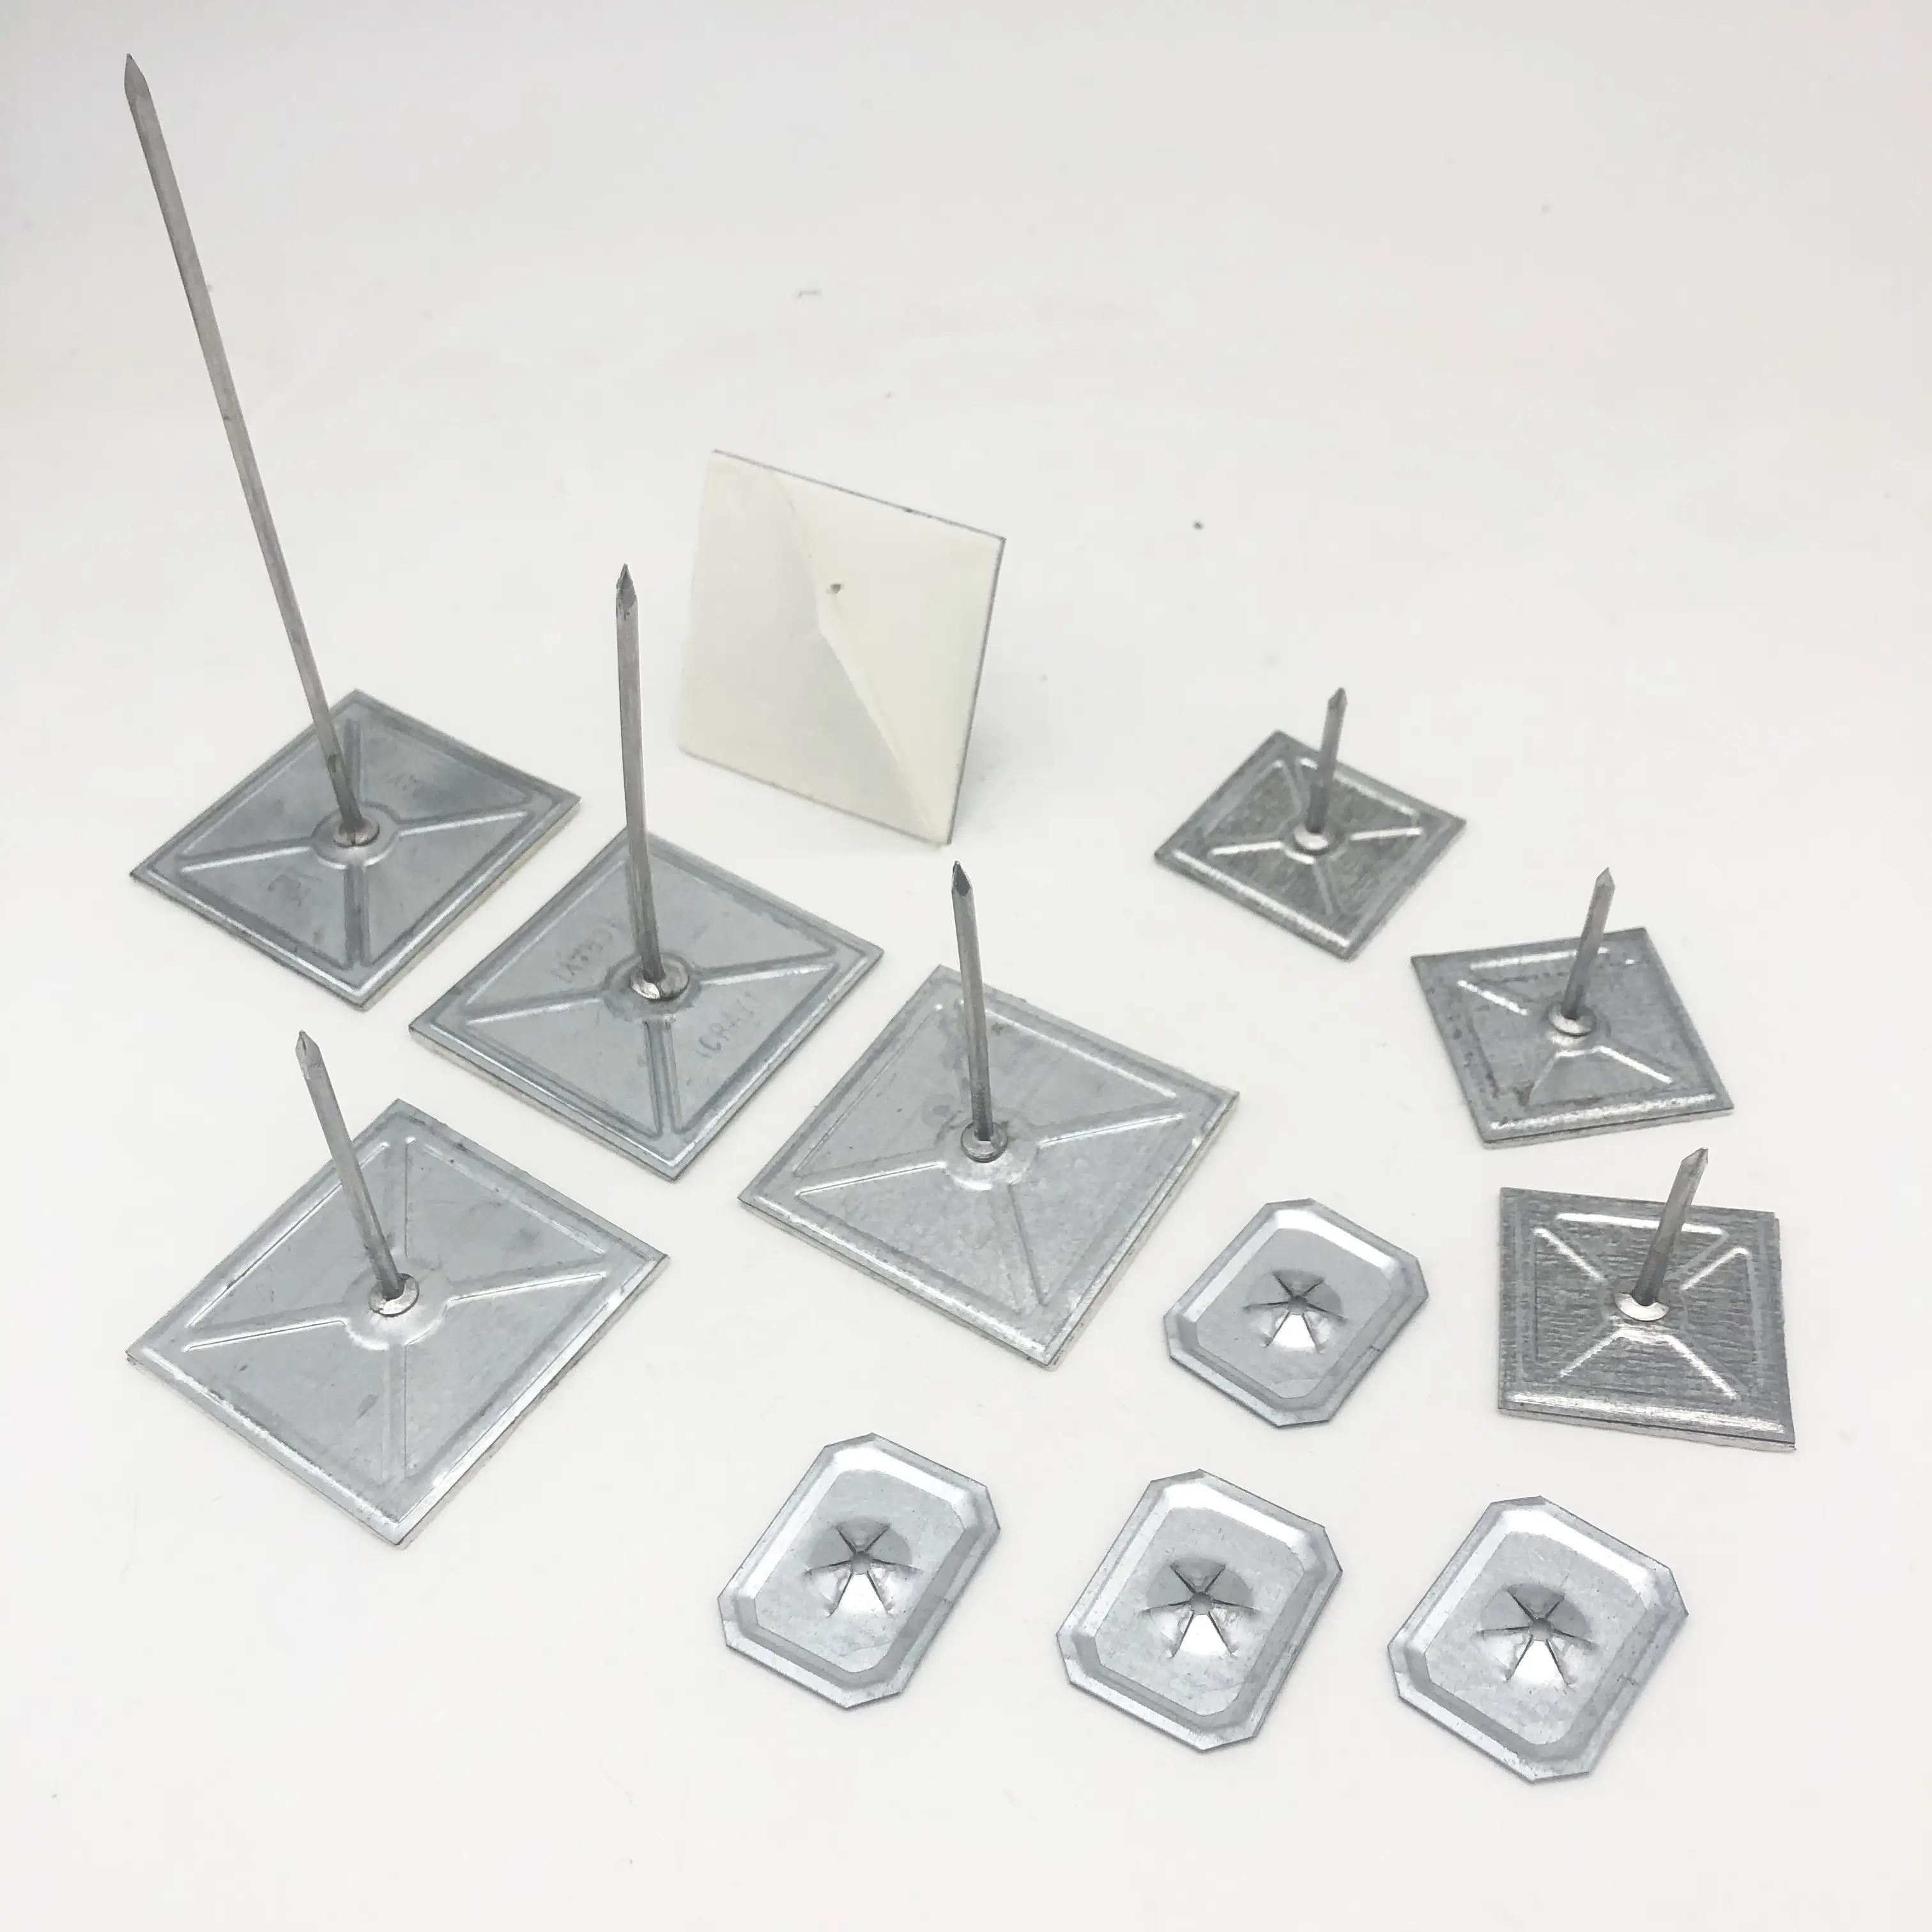 Self-adhesive Self Adhesive Insulation Pin with Washer